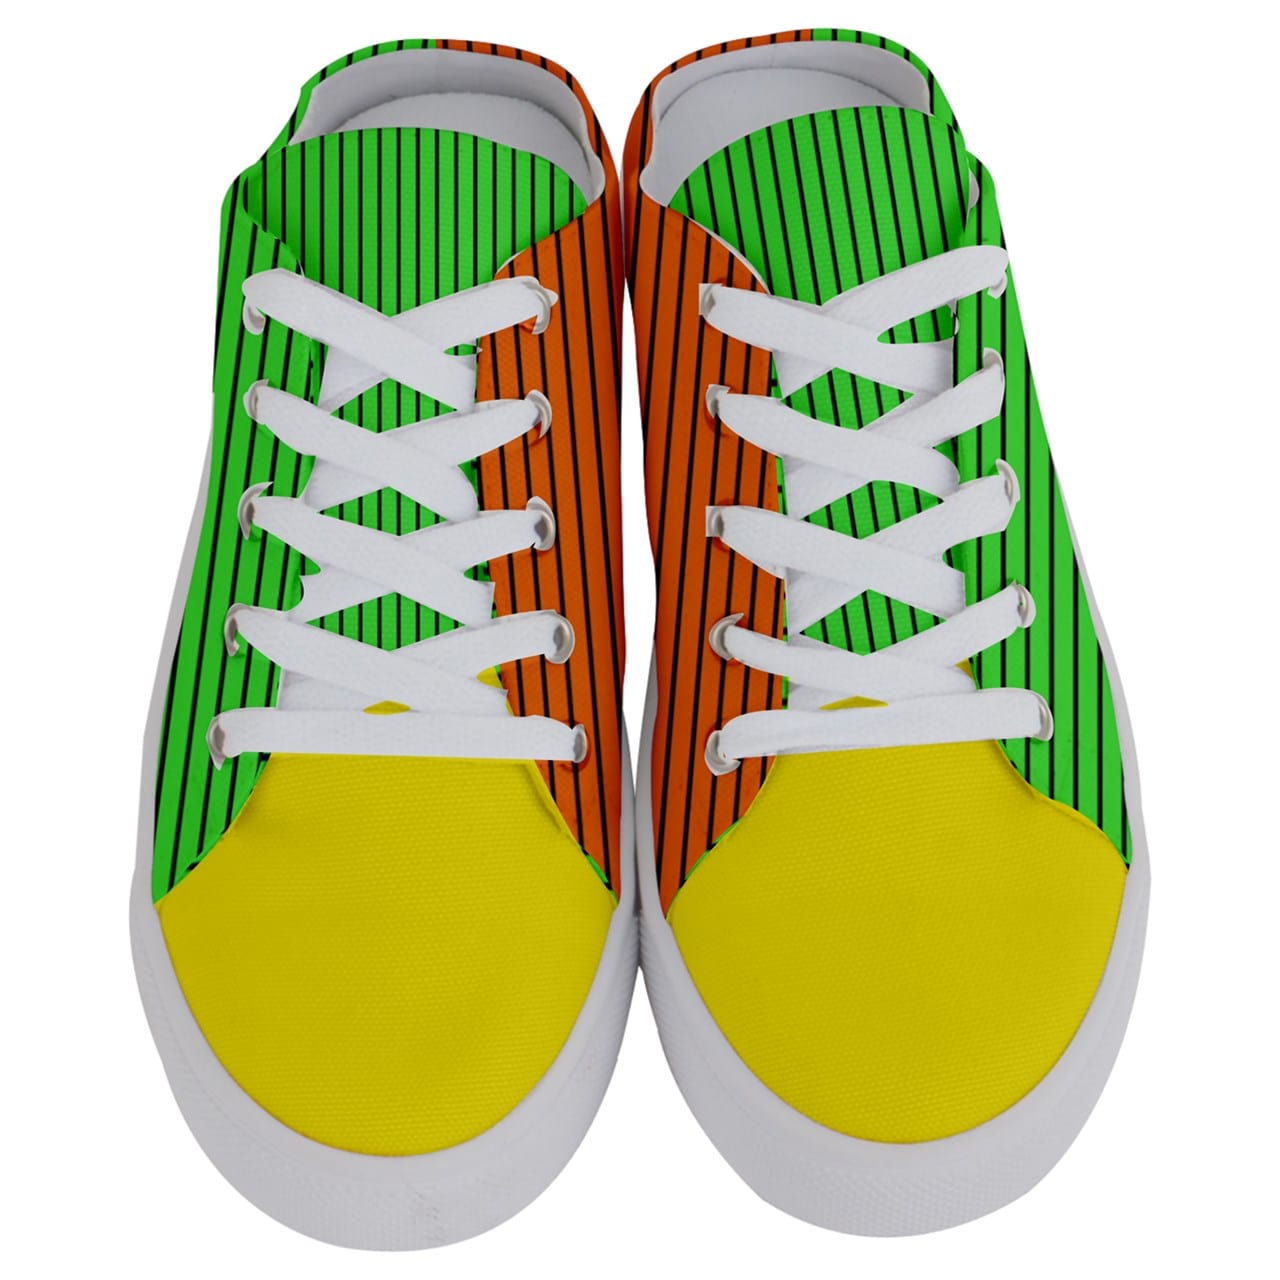 the-wheaten-store-sneakers-women-s-half-slippers-neon-green-shoes-32972850430149